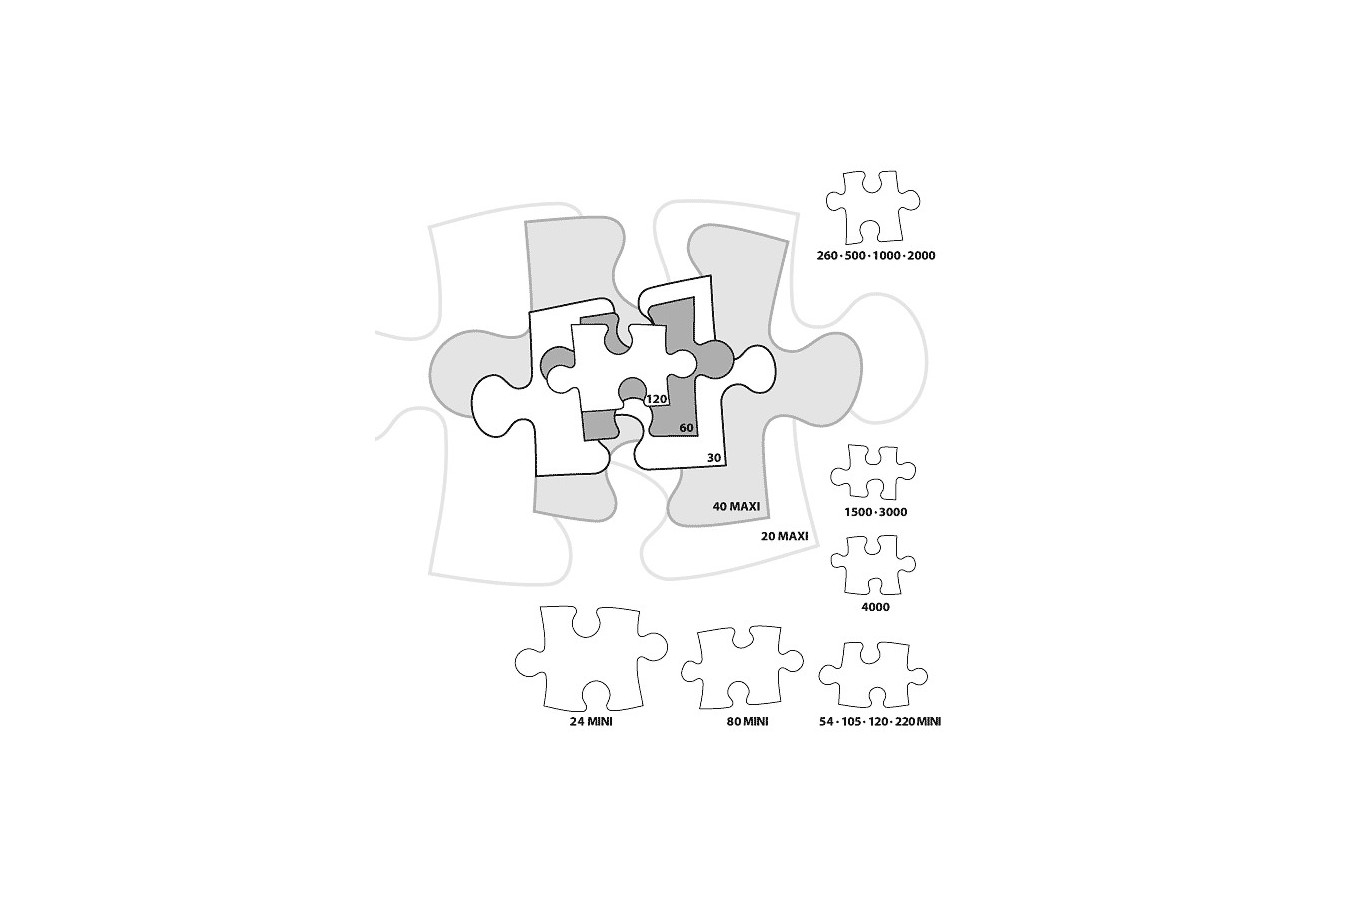 Puzzle Castorland - Jeep Wrangler, 180 Piese